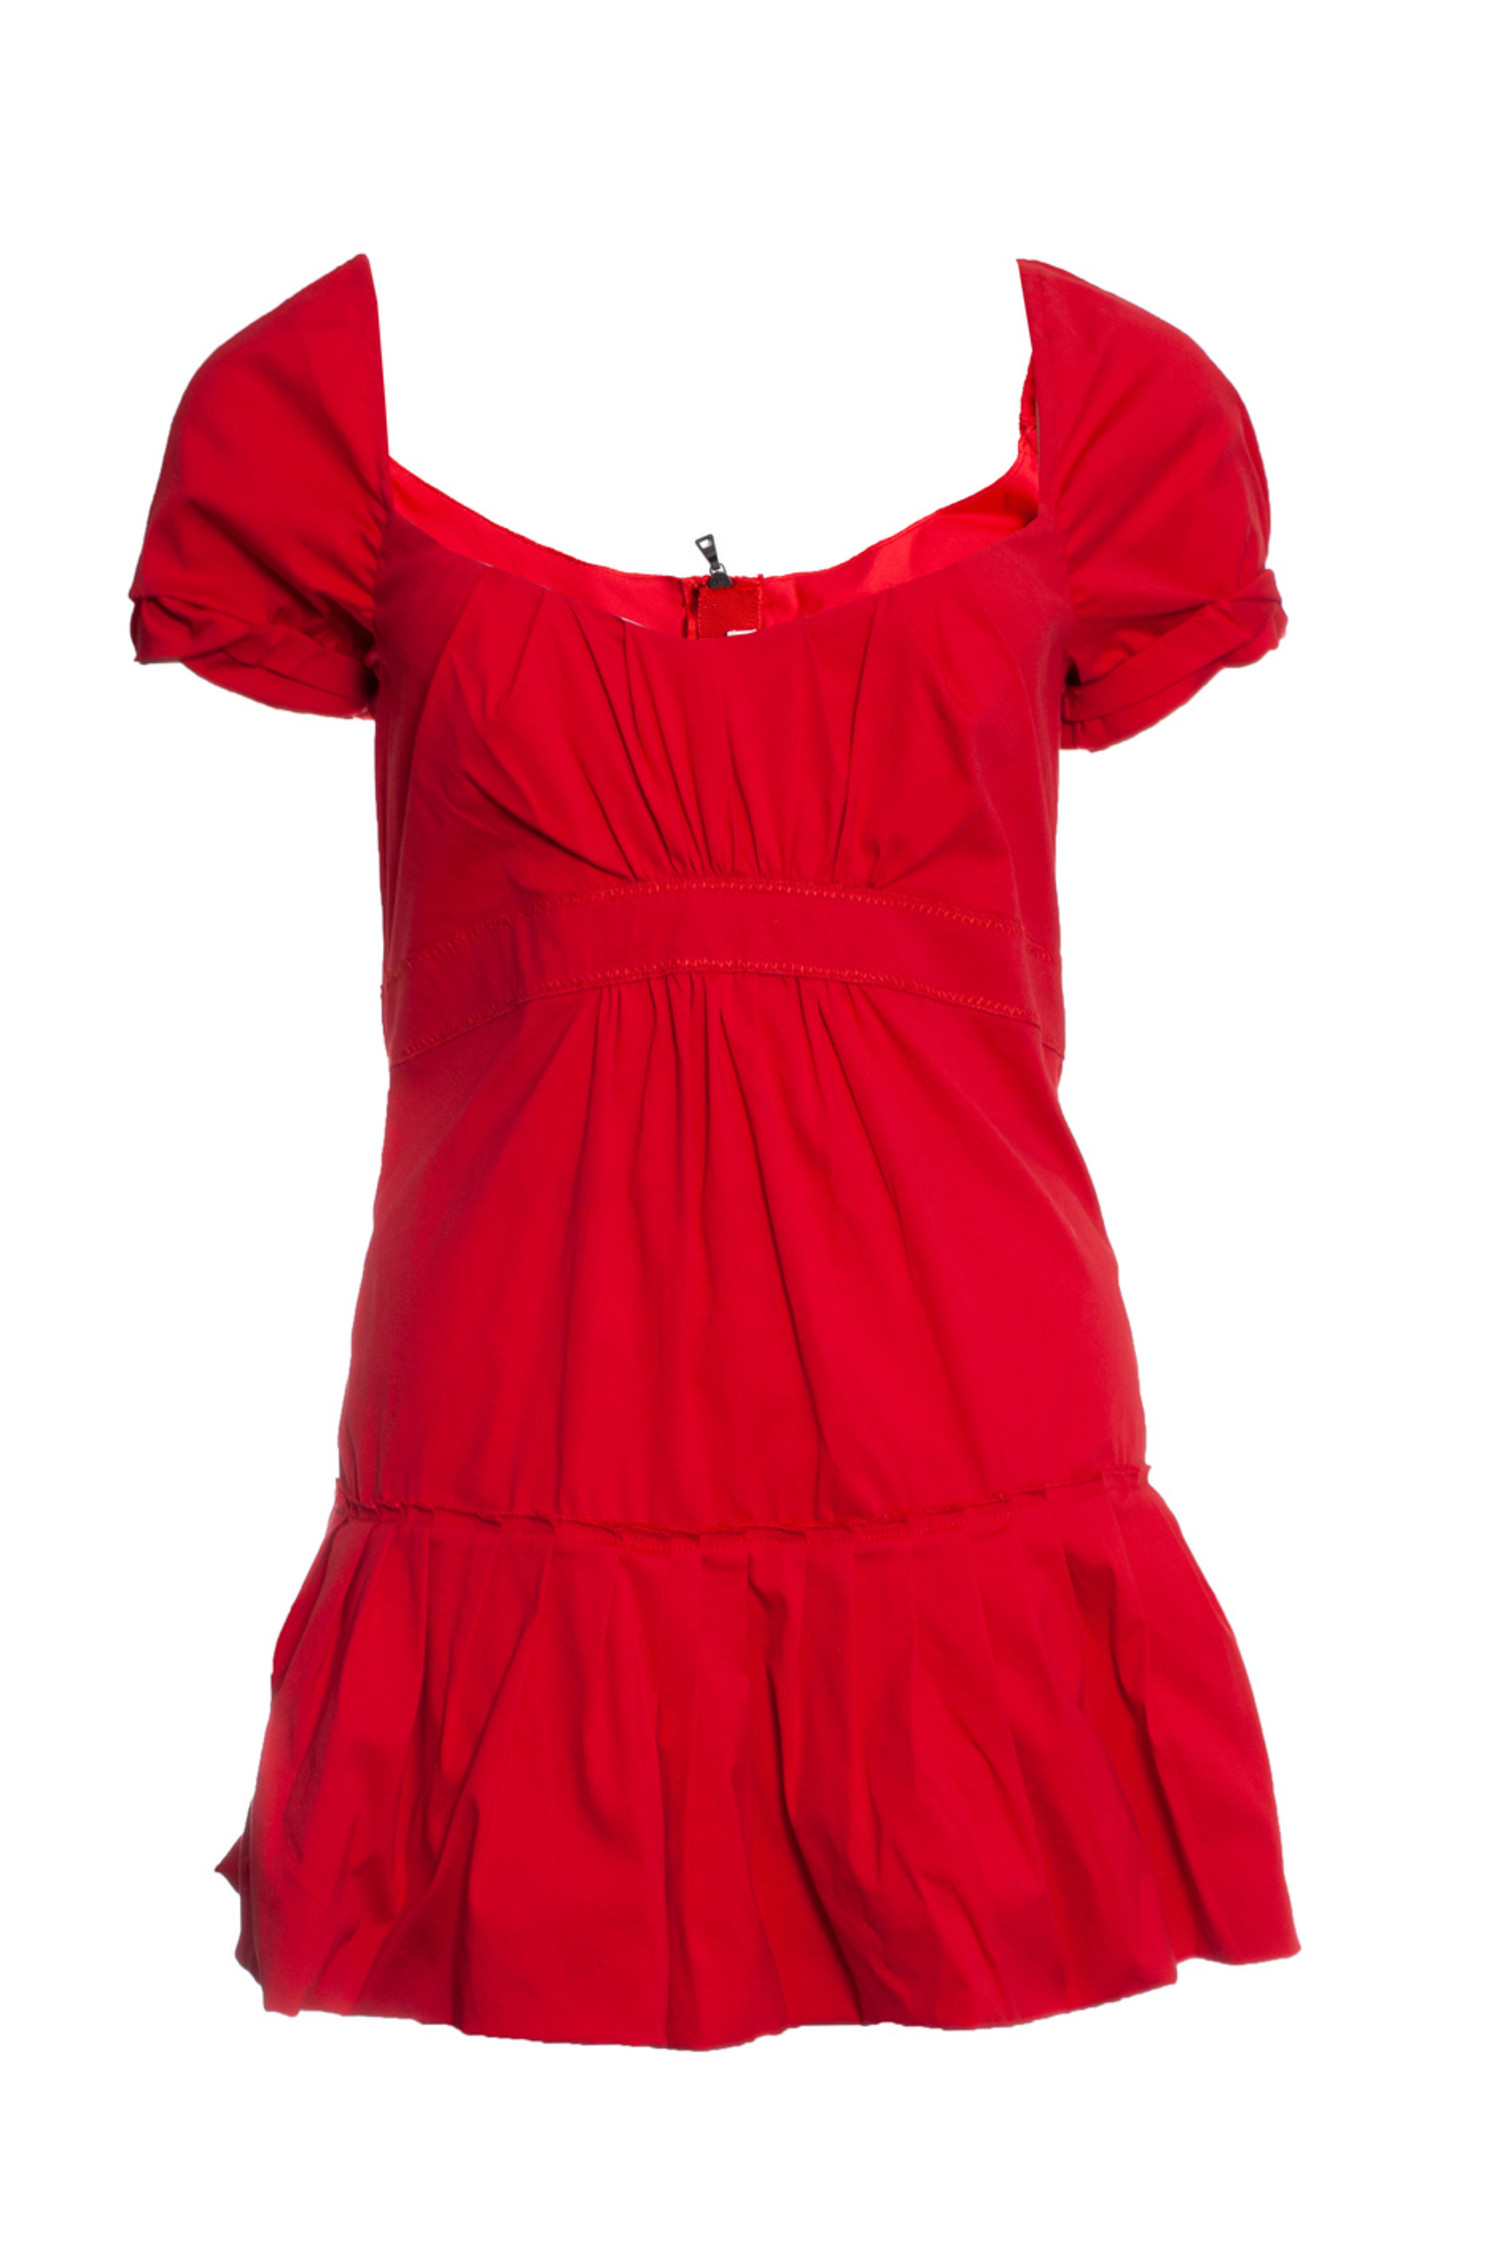 Prada, Red dress with ruffles. - Unique Designer Pieces